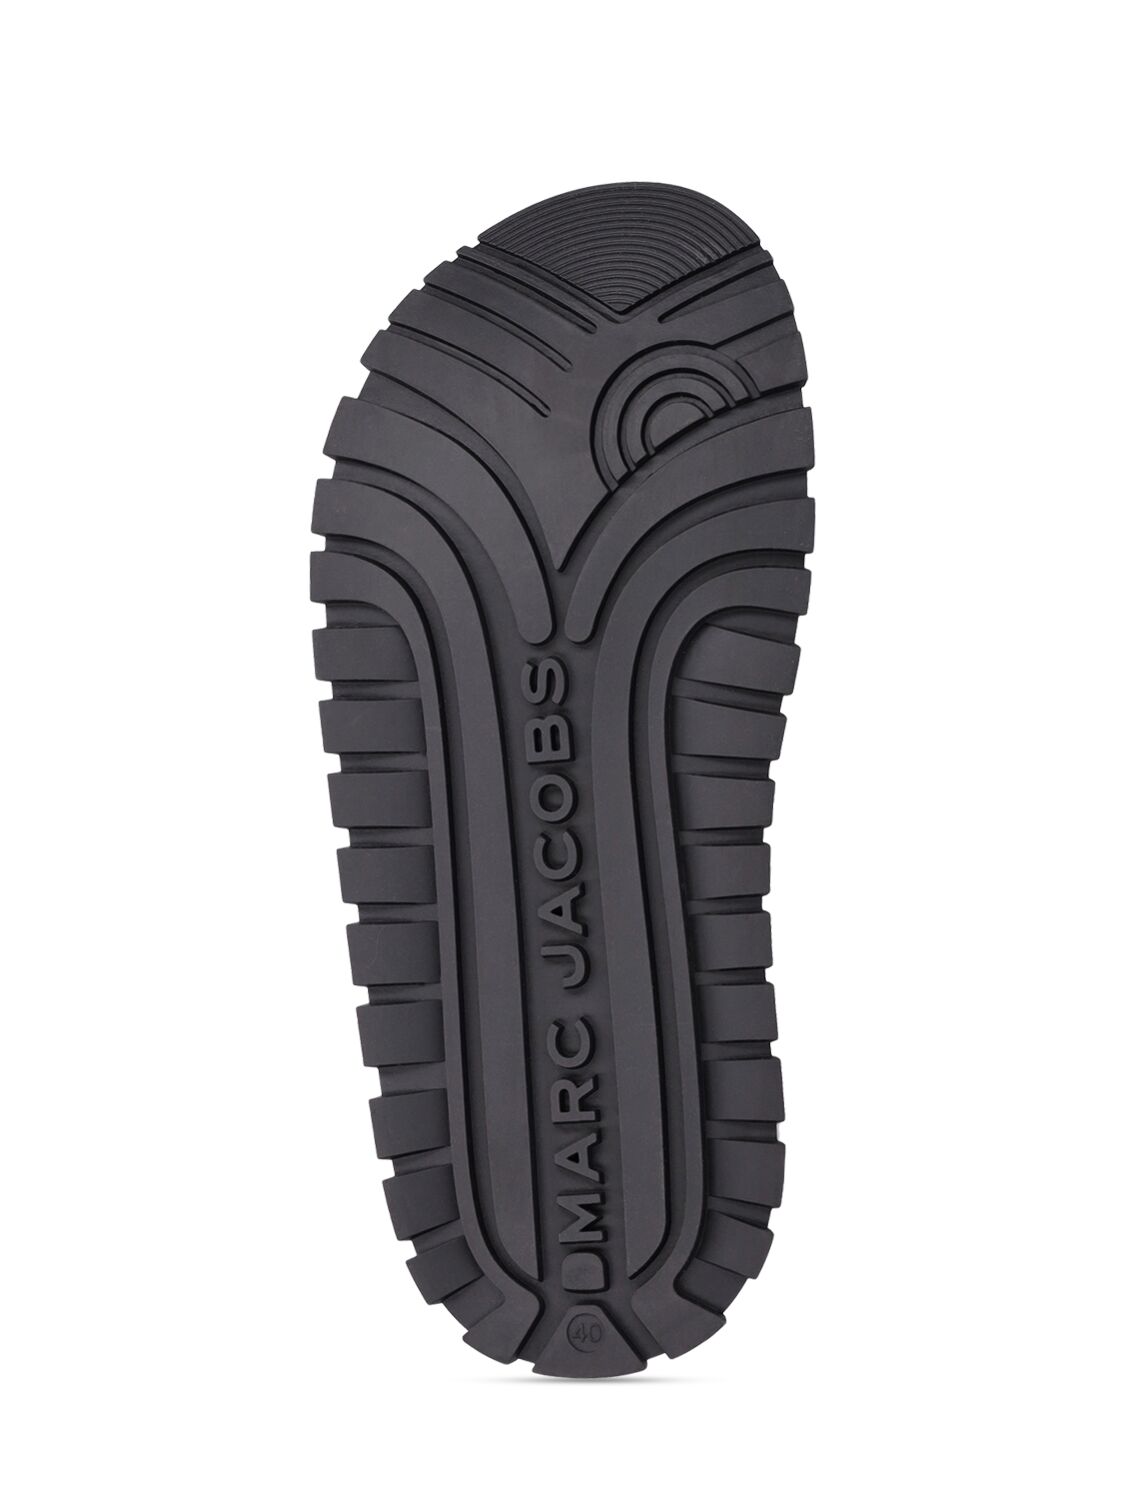 Shop Marc Jacobs Leather Slide Sandals In Black,white